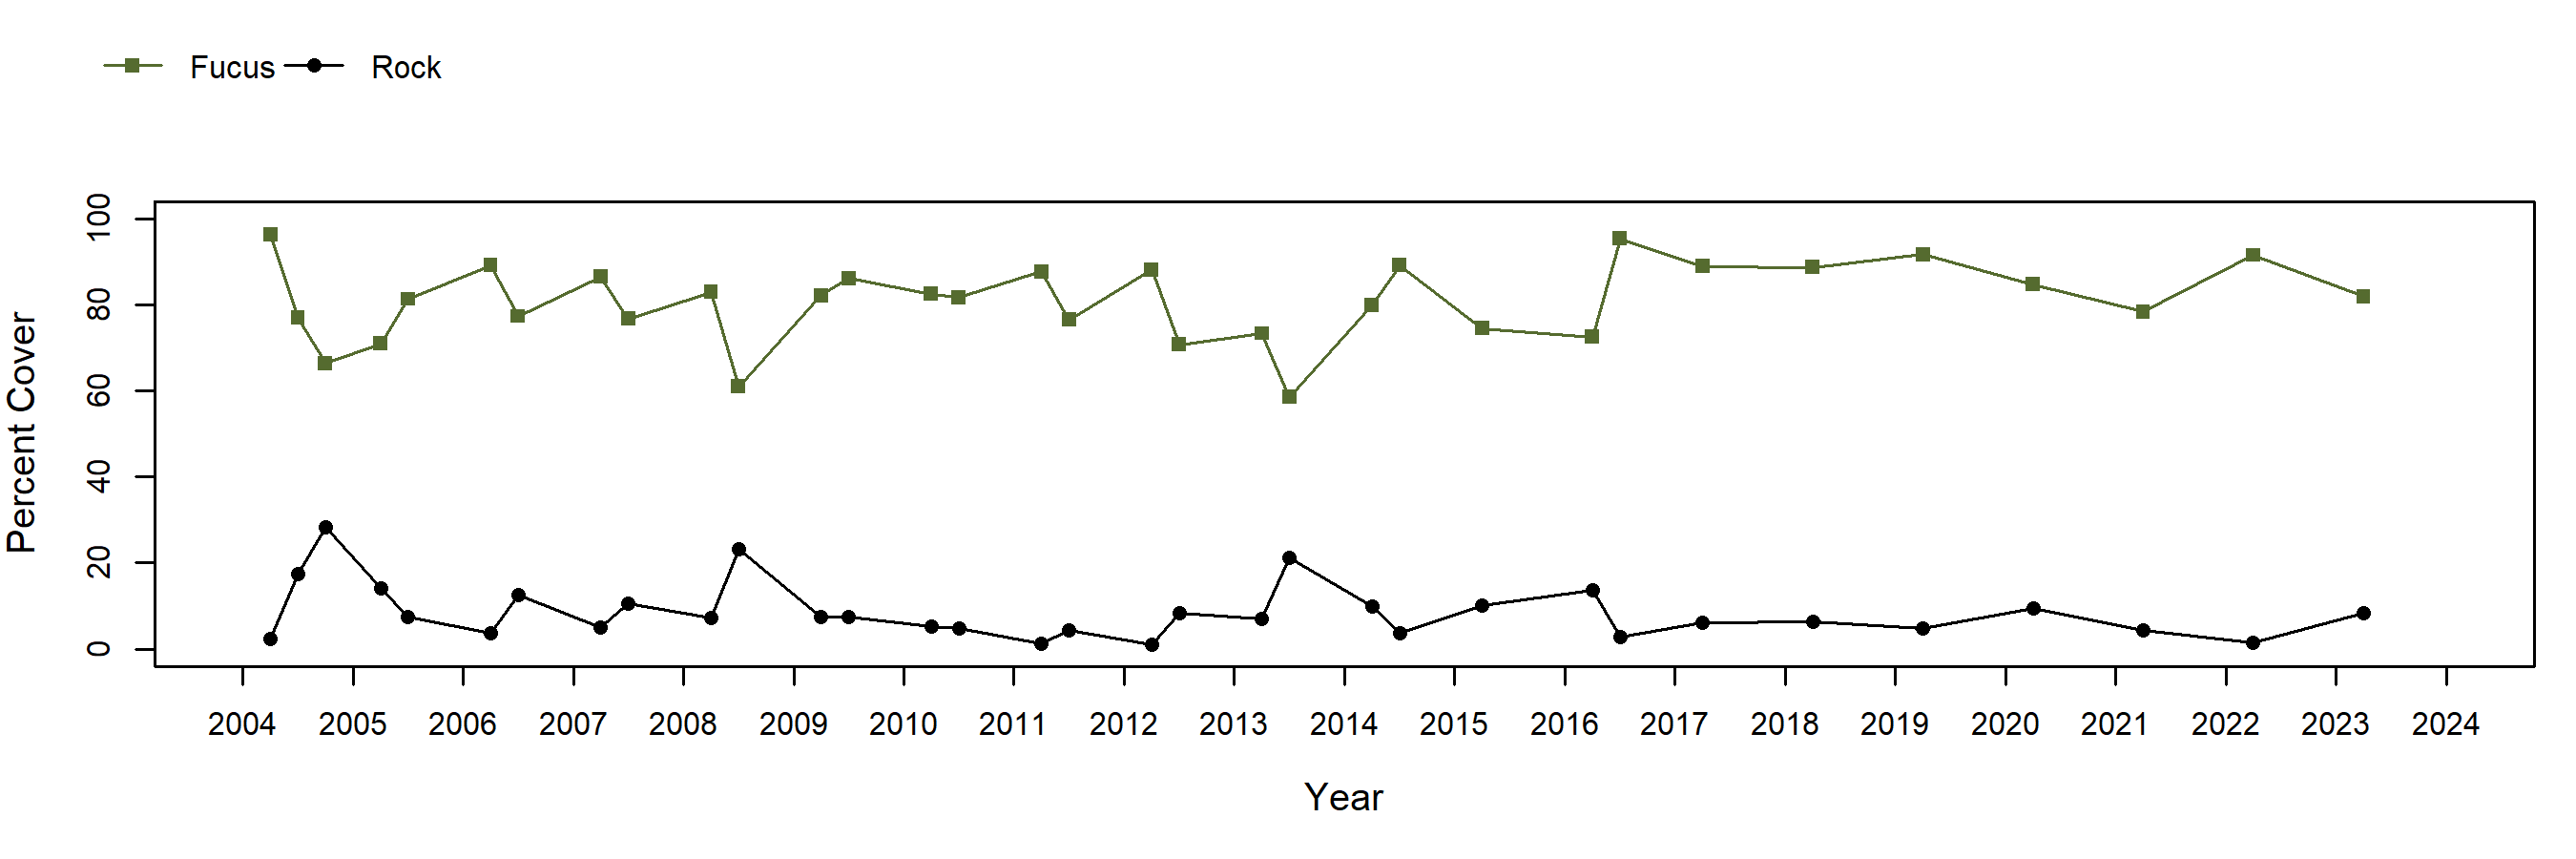 Damnation Creek Fucus trend plot